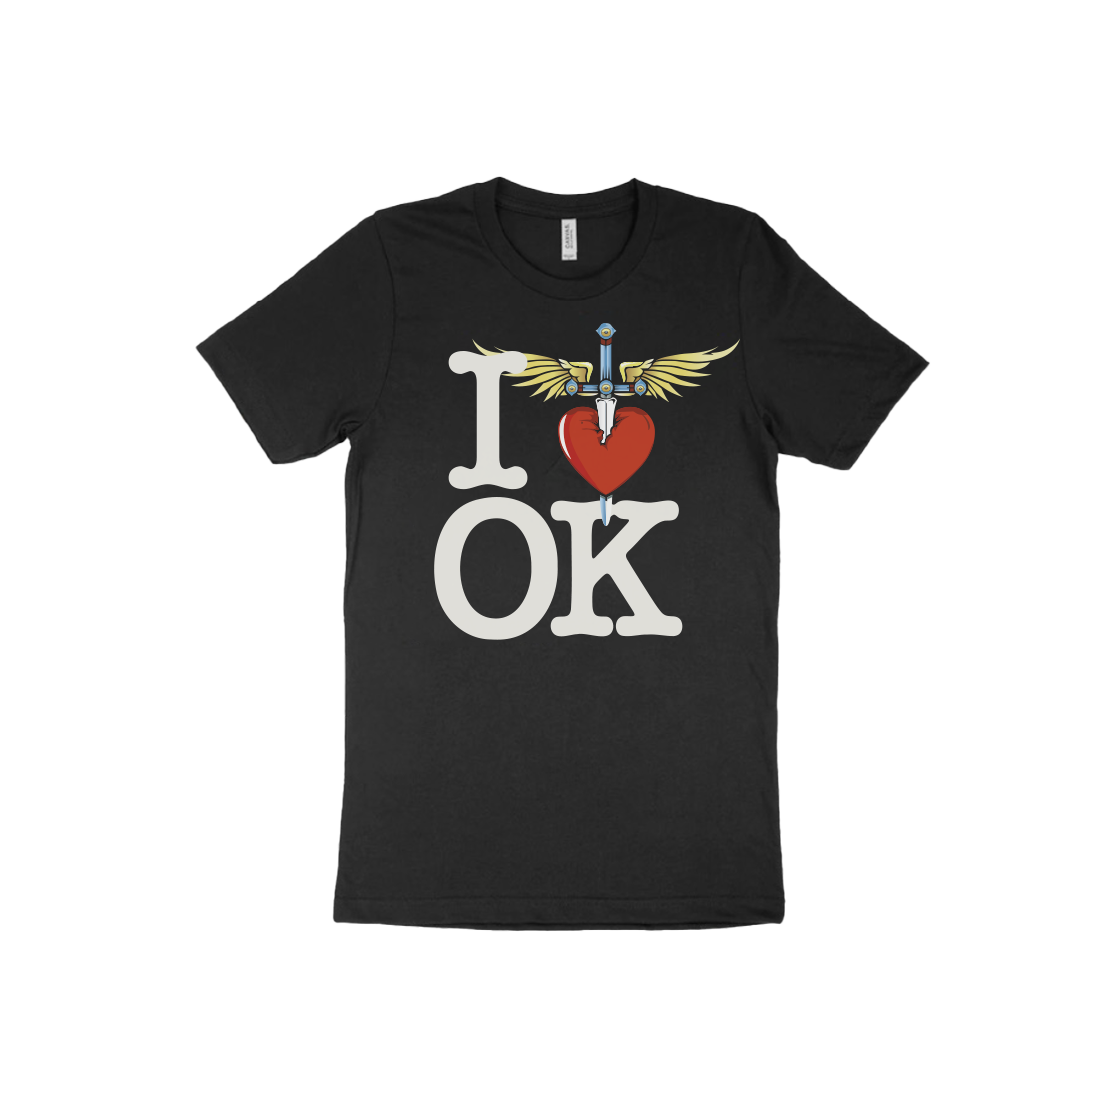 I Heart Black T-Shirt - OK